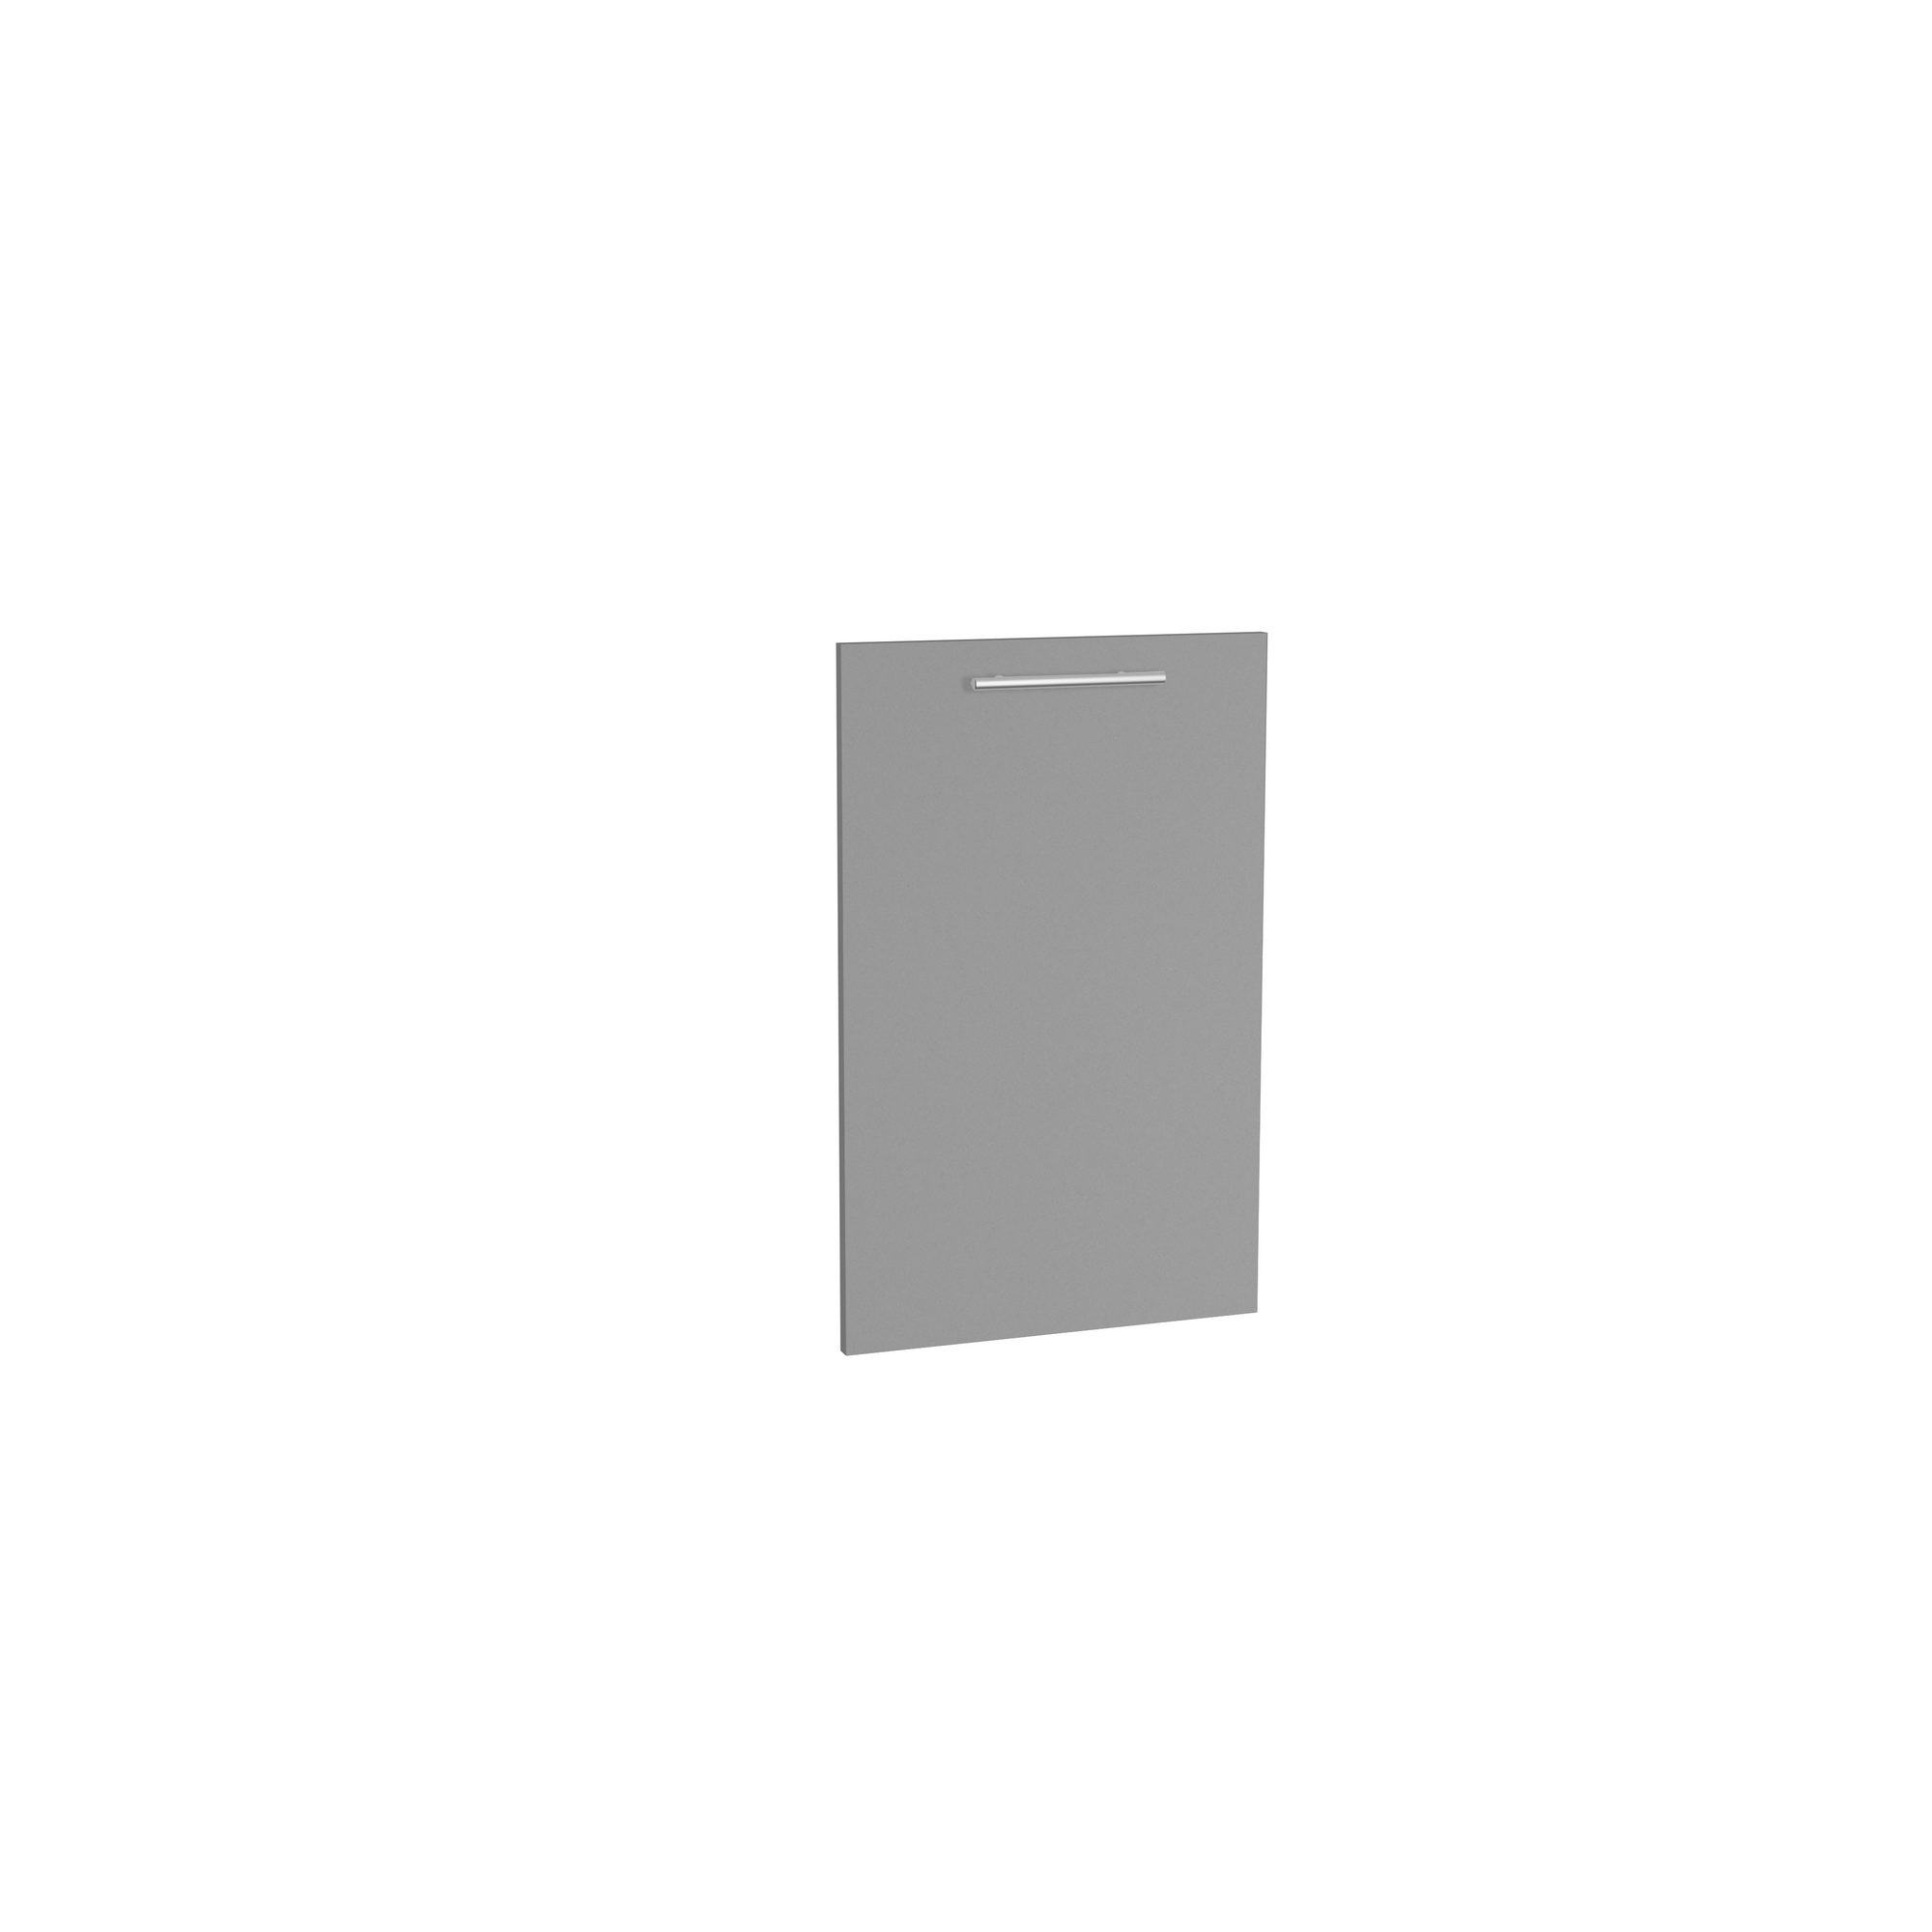 Tür für vollintegrierten Geschirrspüler 'Optikomfort Mats825' grau 44,6 x 70 x 1,6 cm + product picture